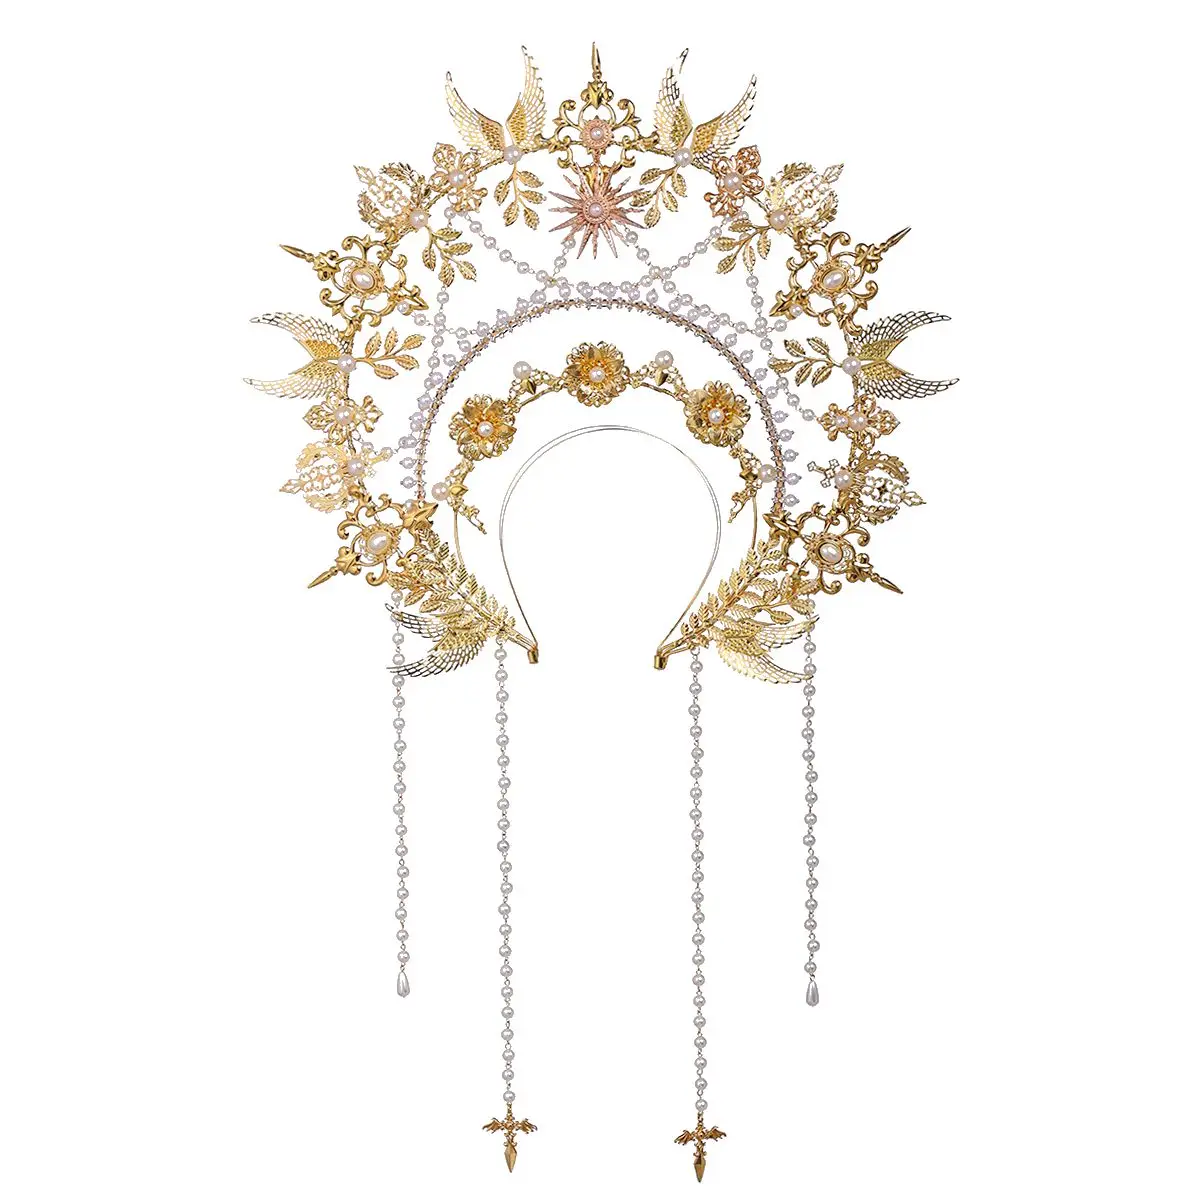 Sun Goddess Angel KC Halo Crown Headpiece Gold Queen Anna Baroque Pearl Tiara Headband Lolita Collection Gothic Accessories